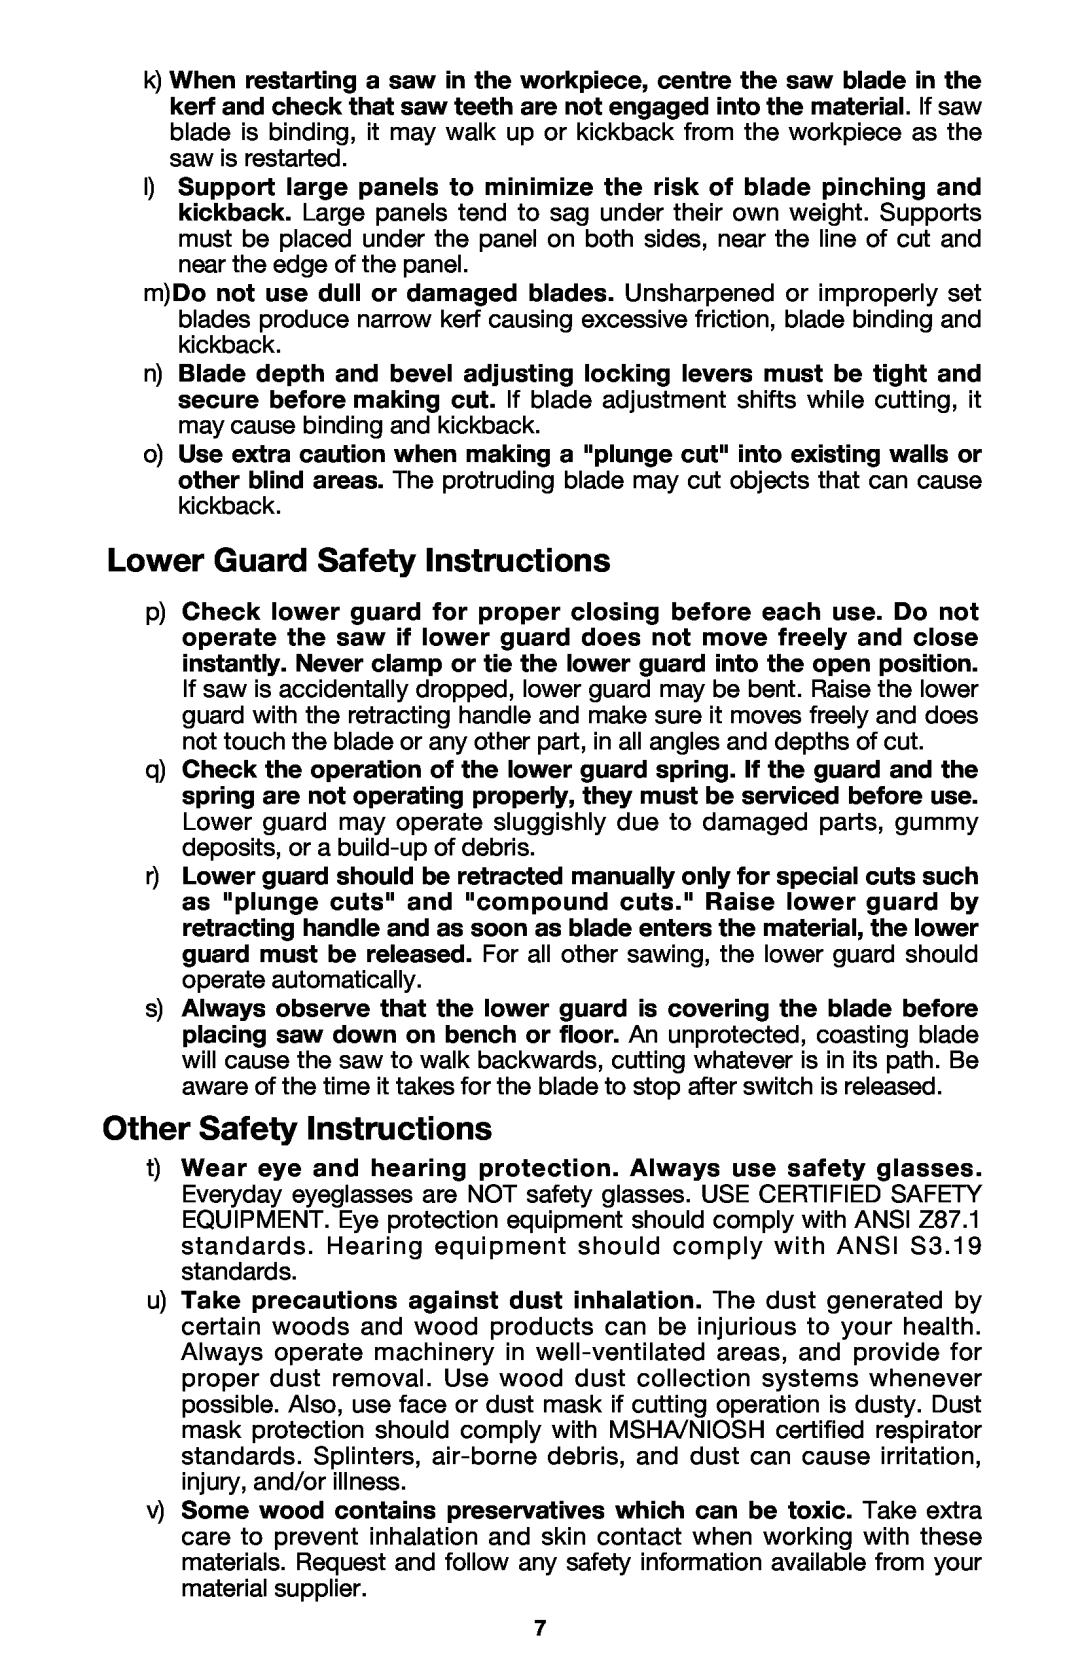 PYLE Audio 314 instruction manual Lower Guard Safety Instructions, Other Safety Instructions 